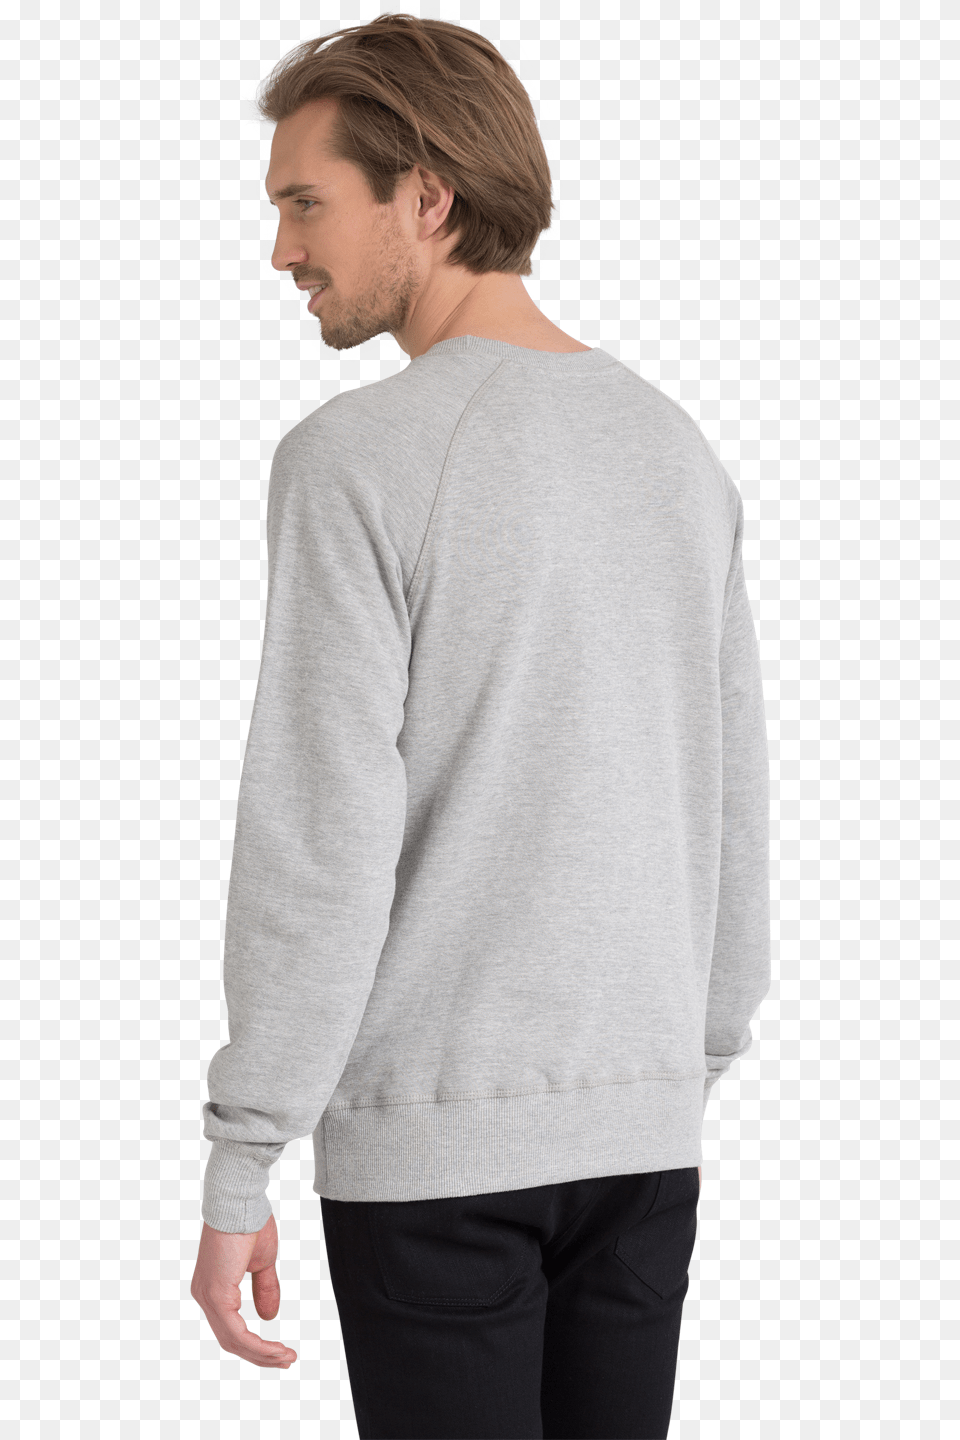 Drake Hotline Bling Sweatshirt, Sweater, Sleeve, Long Sleeve, Knitwear Png Image